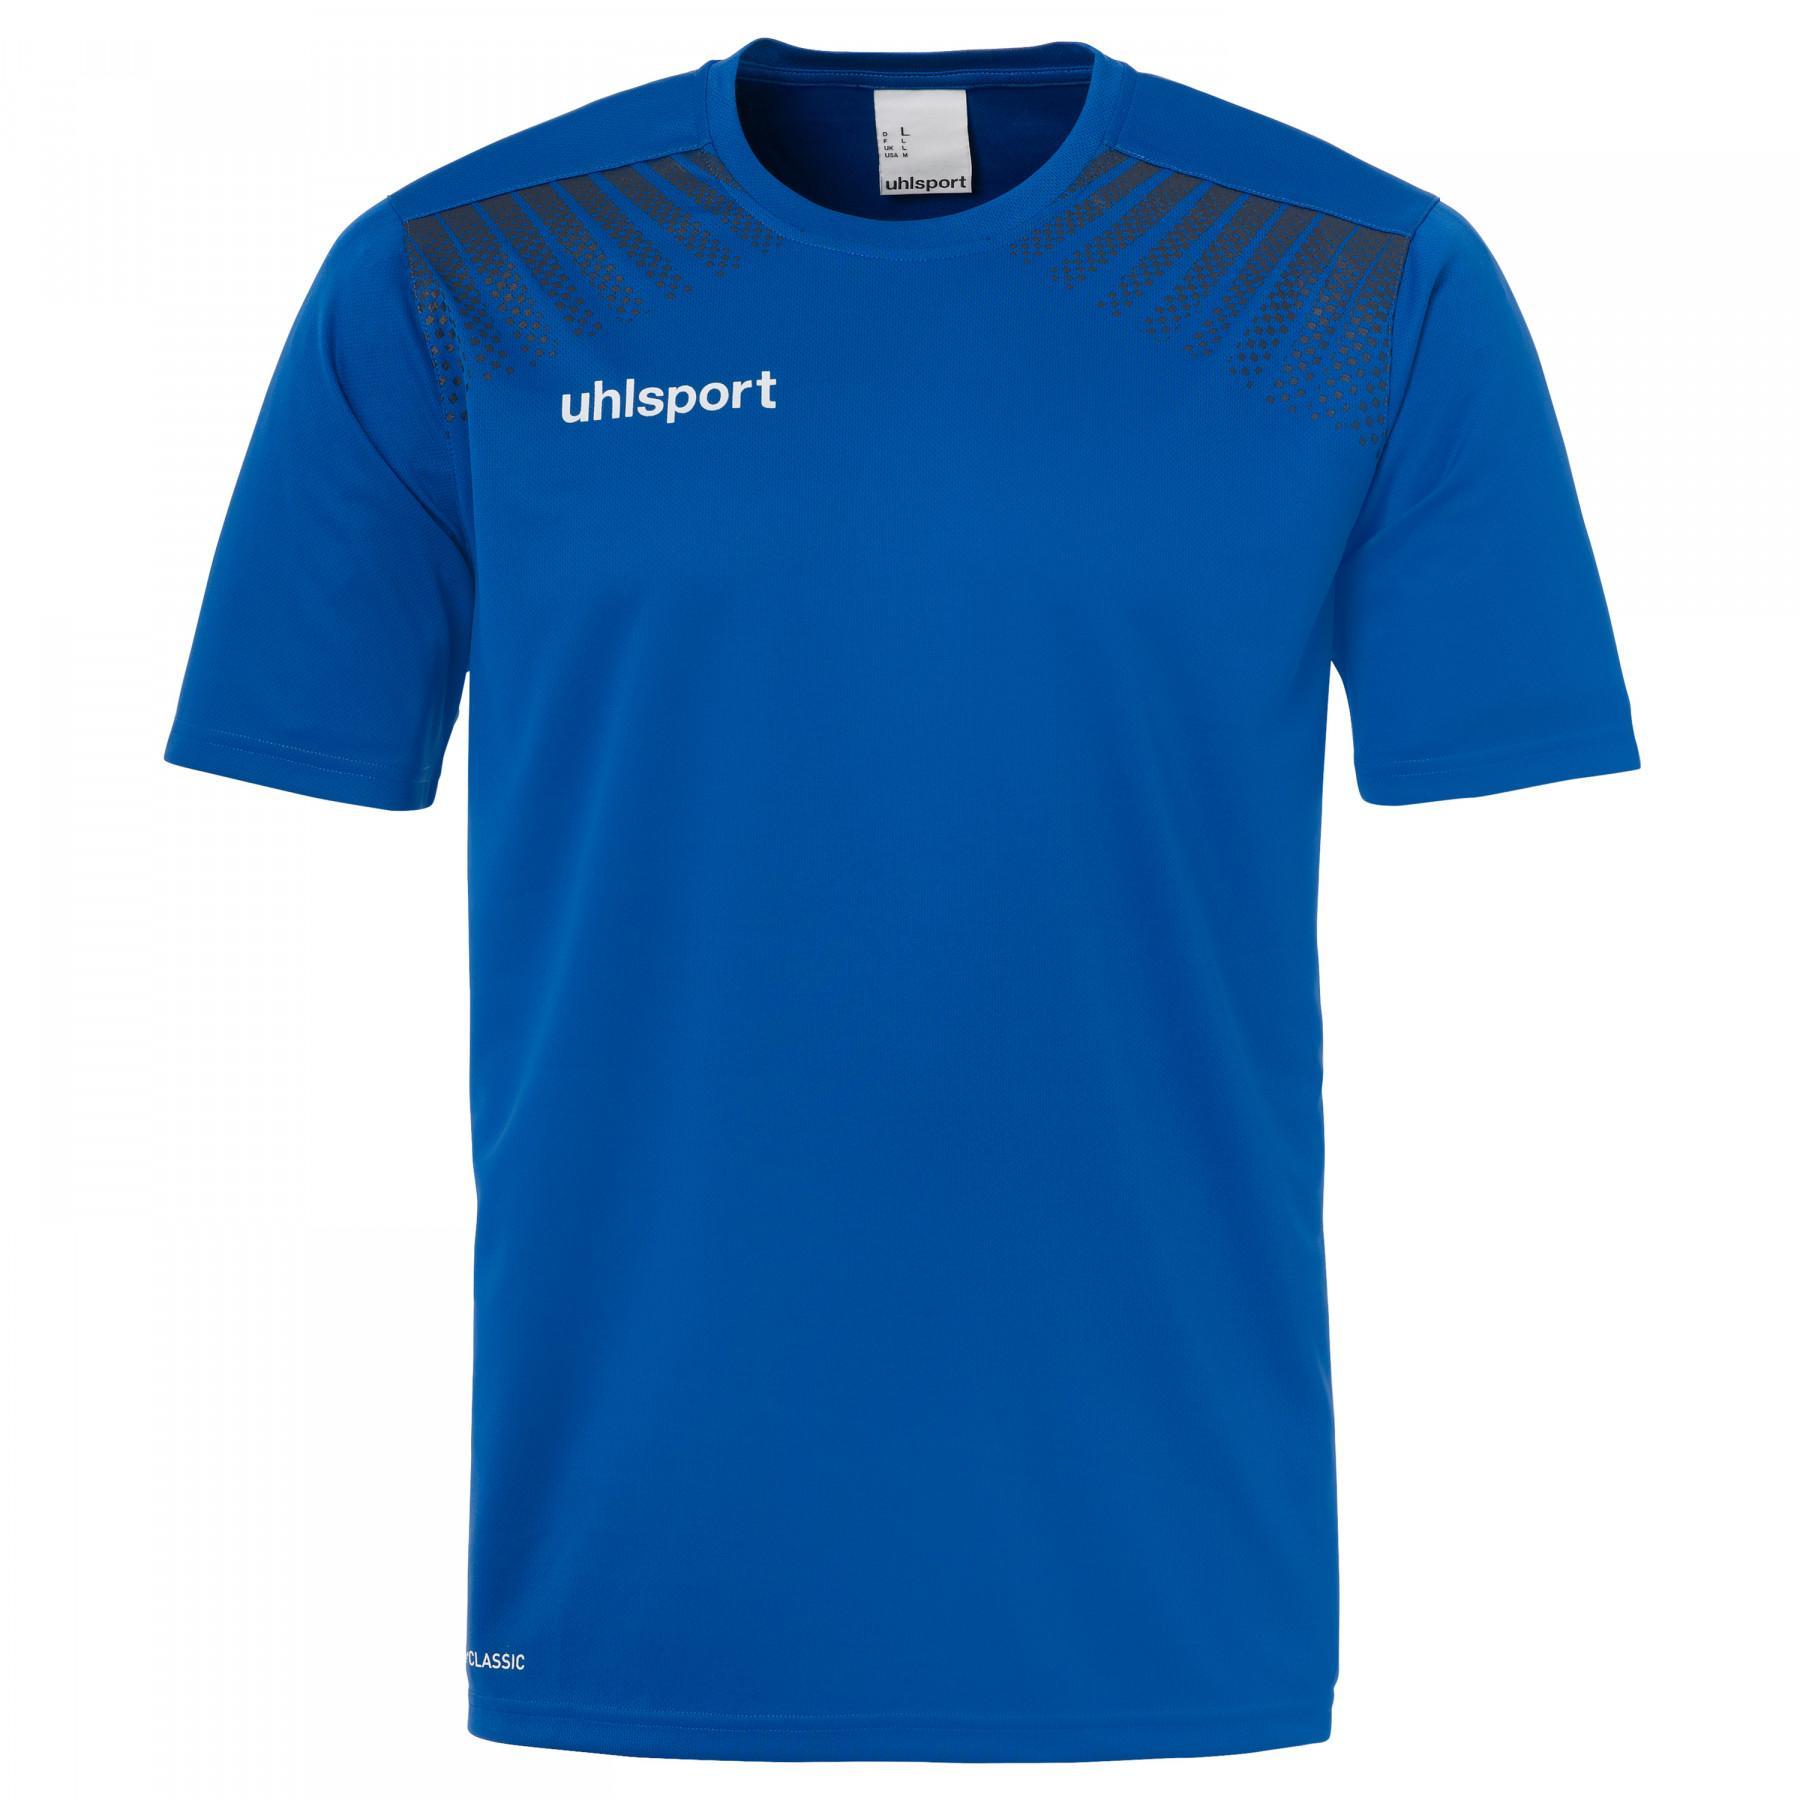 Camiseta niños Uhlsport Goal